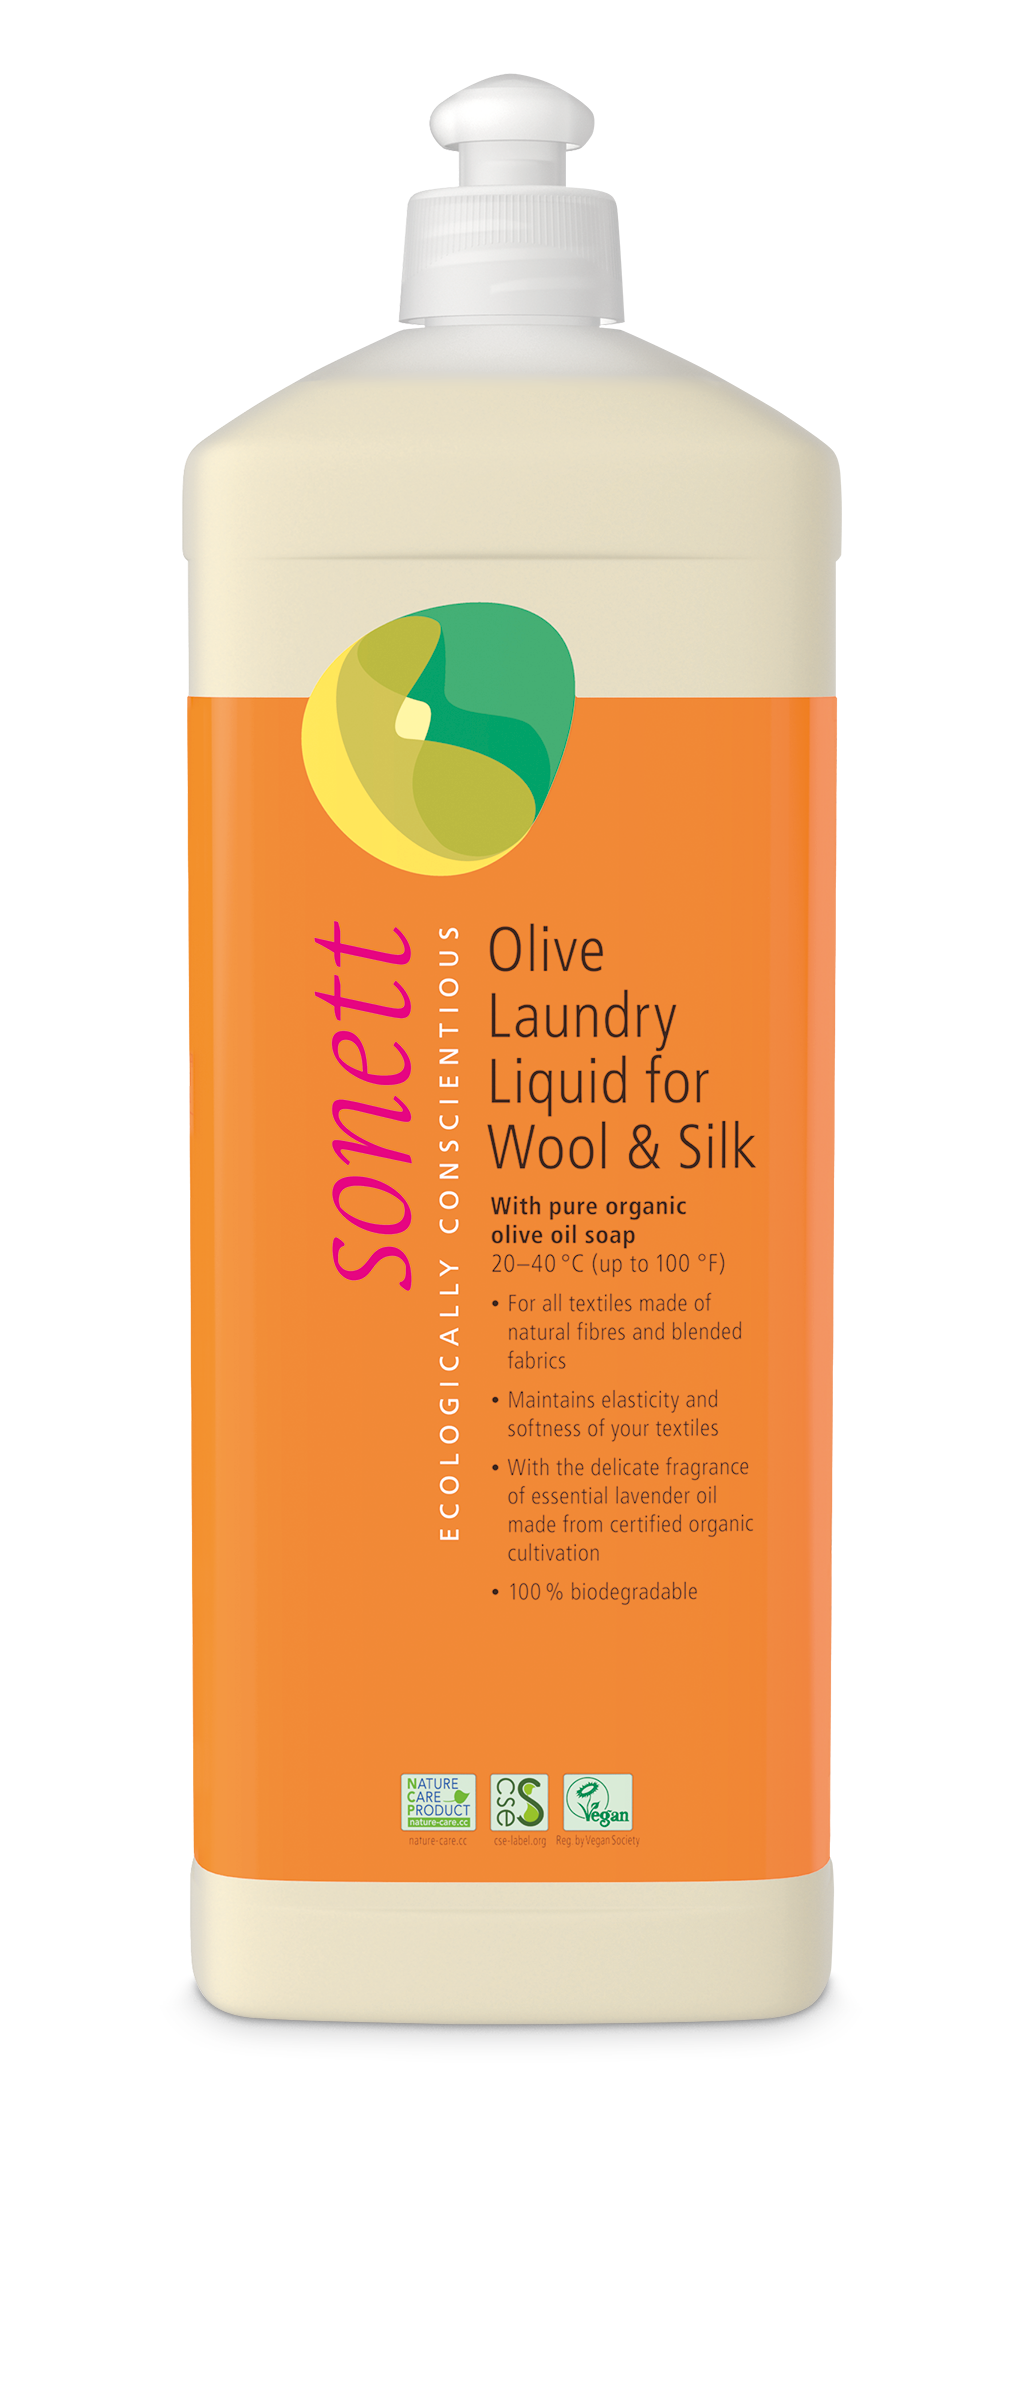 Wool and silk detergent, liquid, 1l